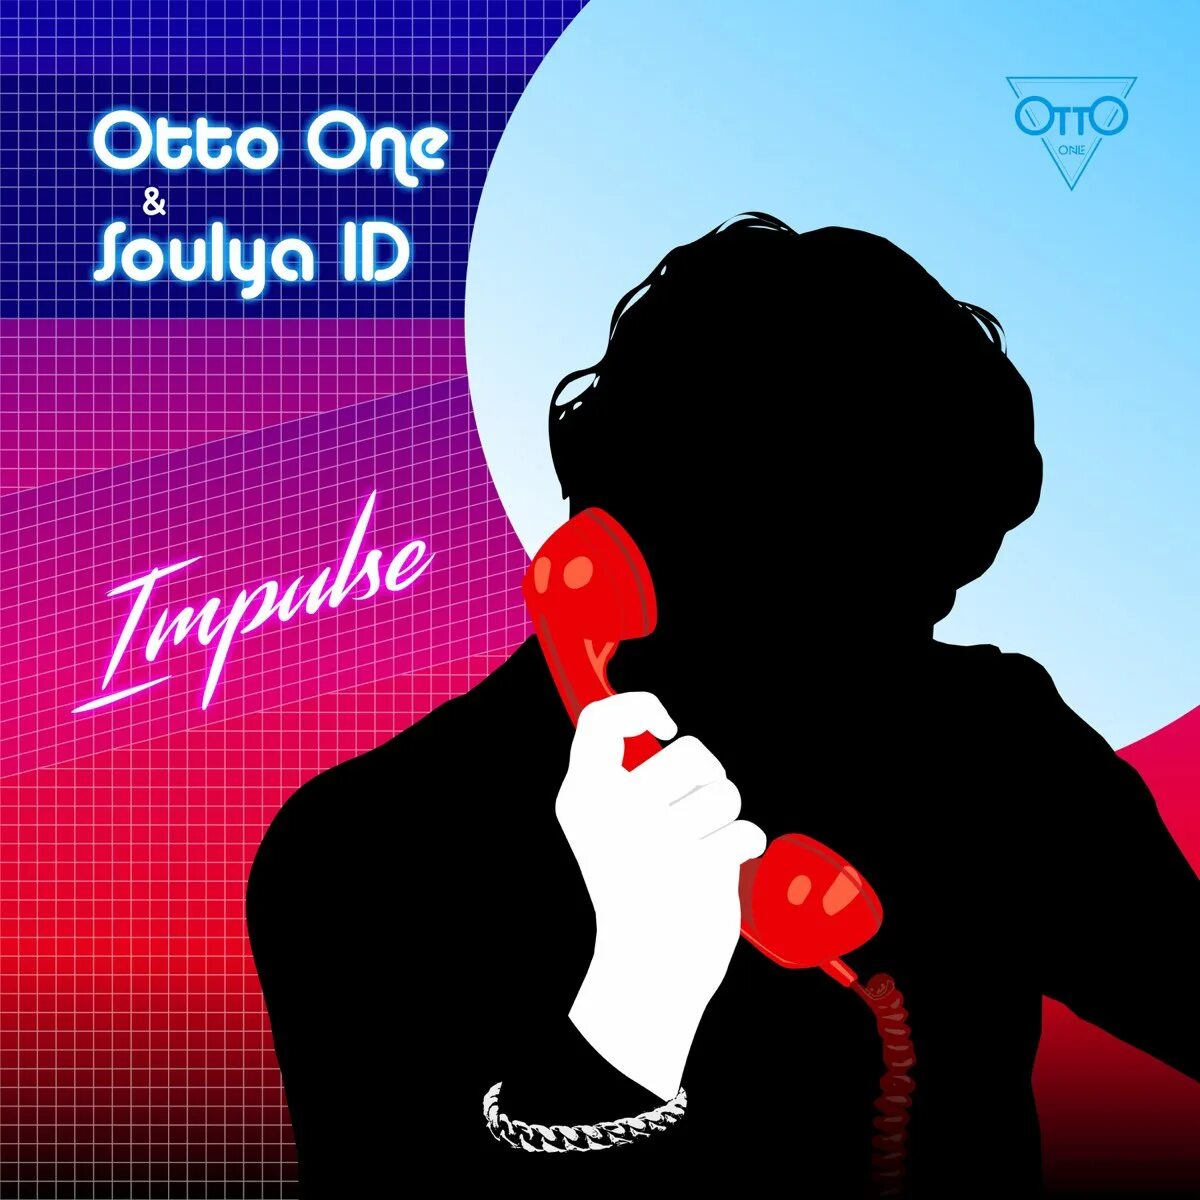 Soulya ID. Impulse (Extended Mix) Otto one & Soulya ID фото. Otto one - my game. Otto one my game (Extended Mix). Feat id